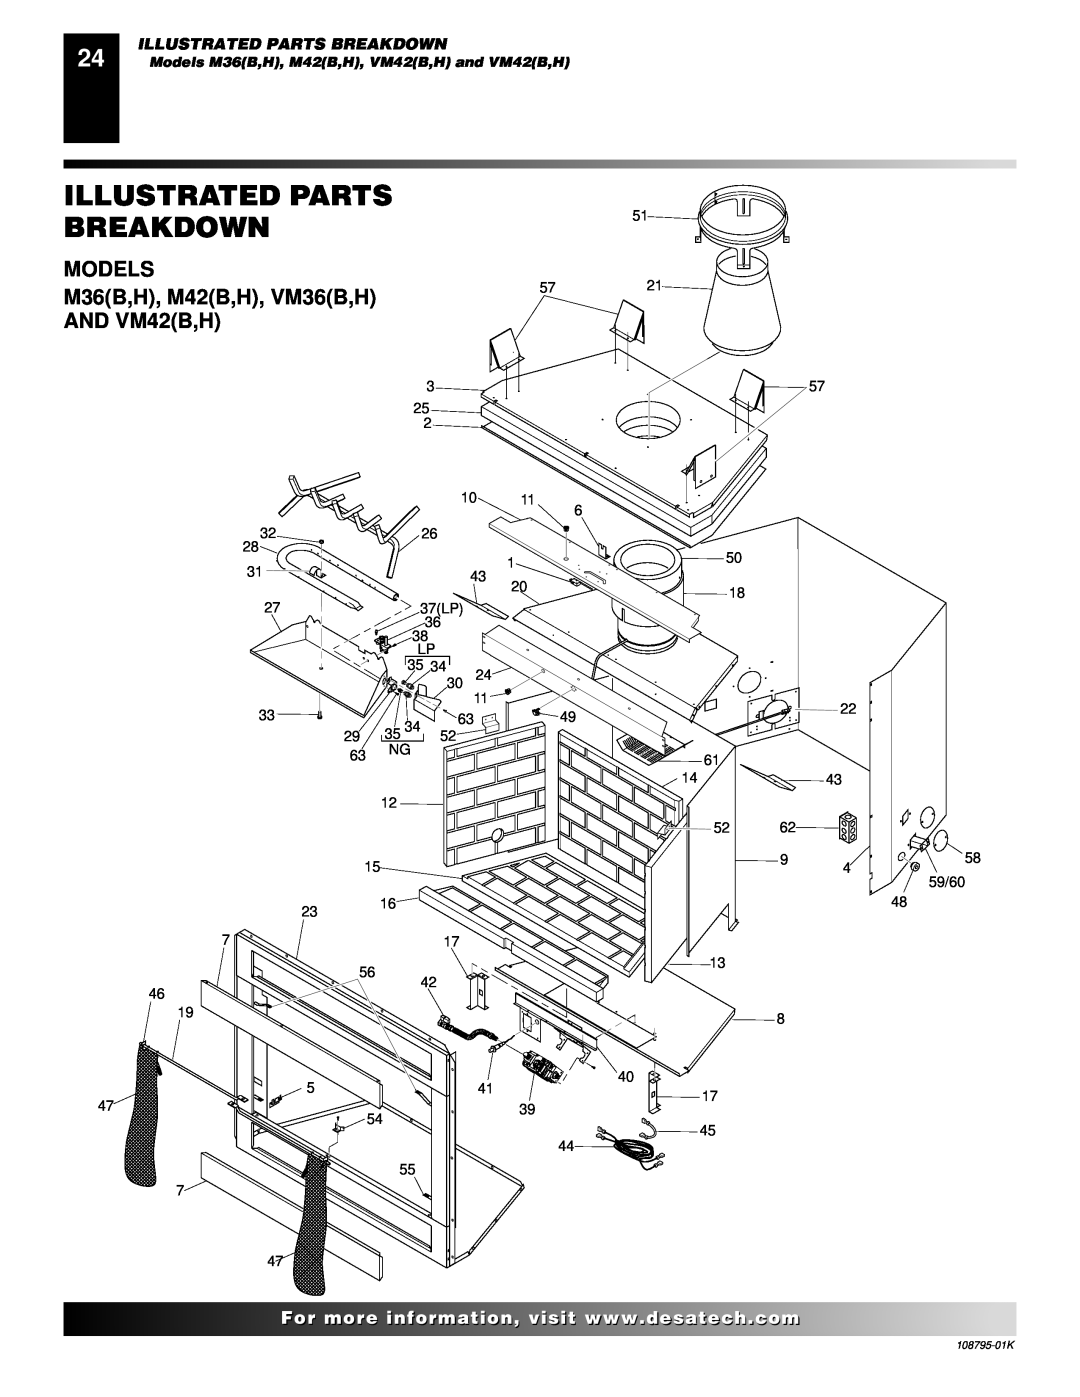 Desa installation manual Illustrated Parts Breakdown, Models, M36B,H, M42B,H, VM36B,H, AND VM42B,H 